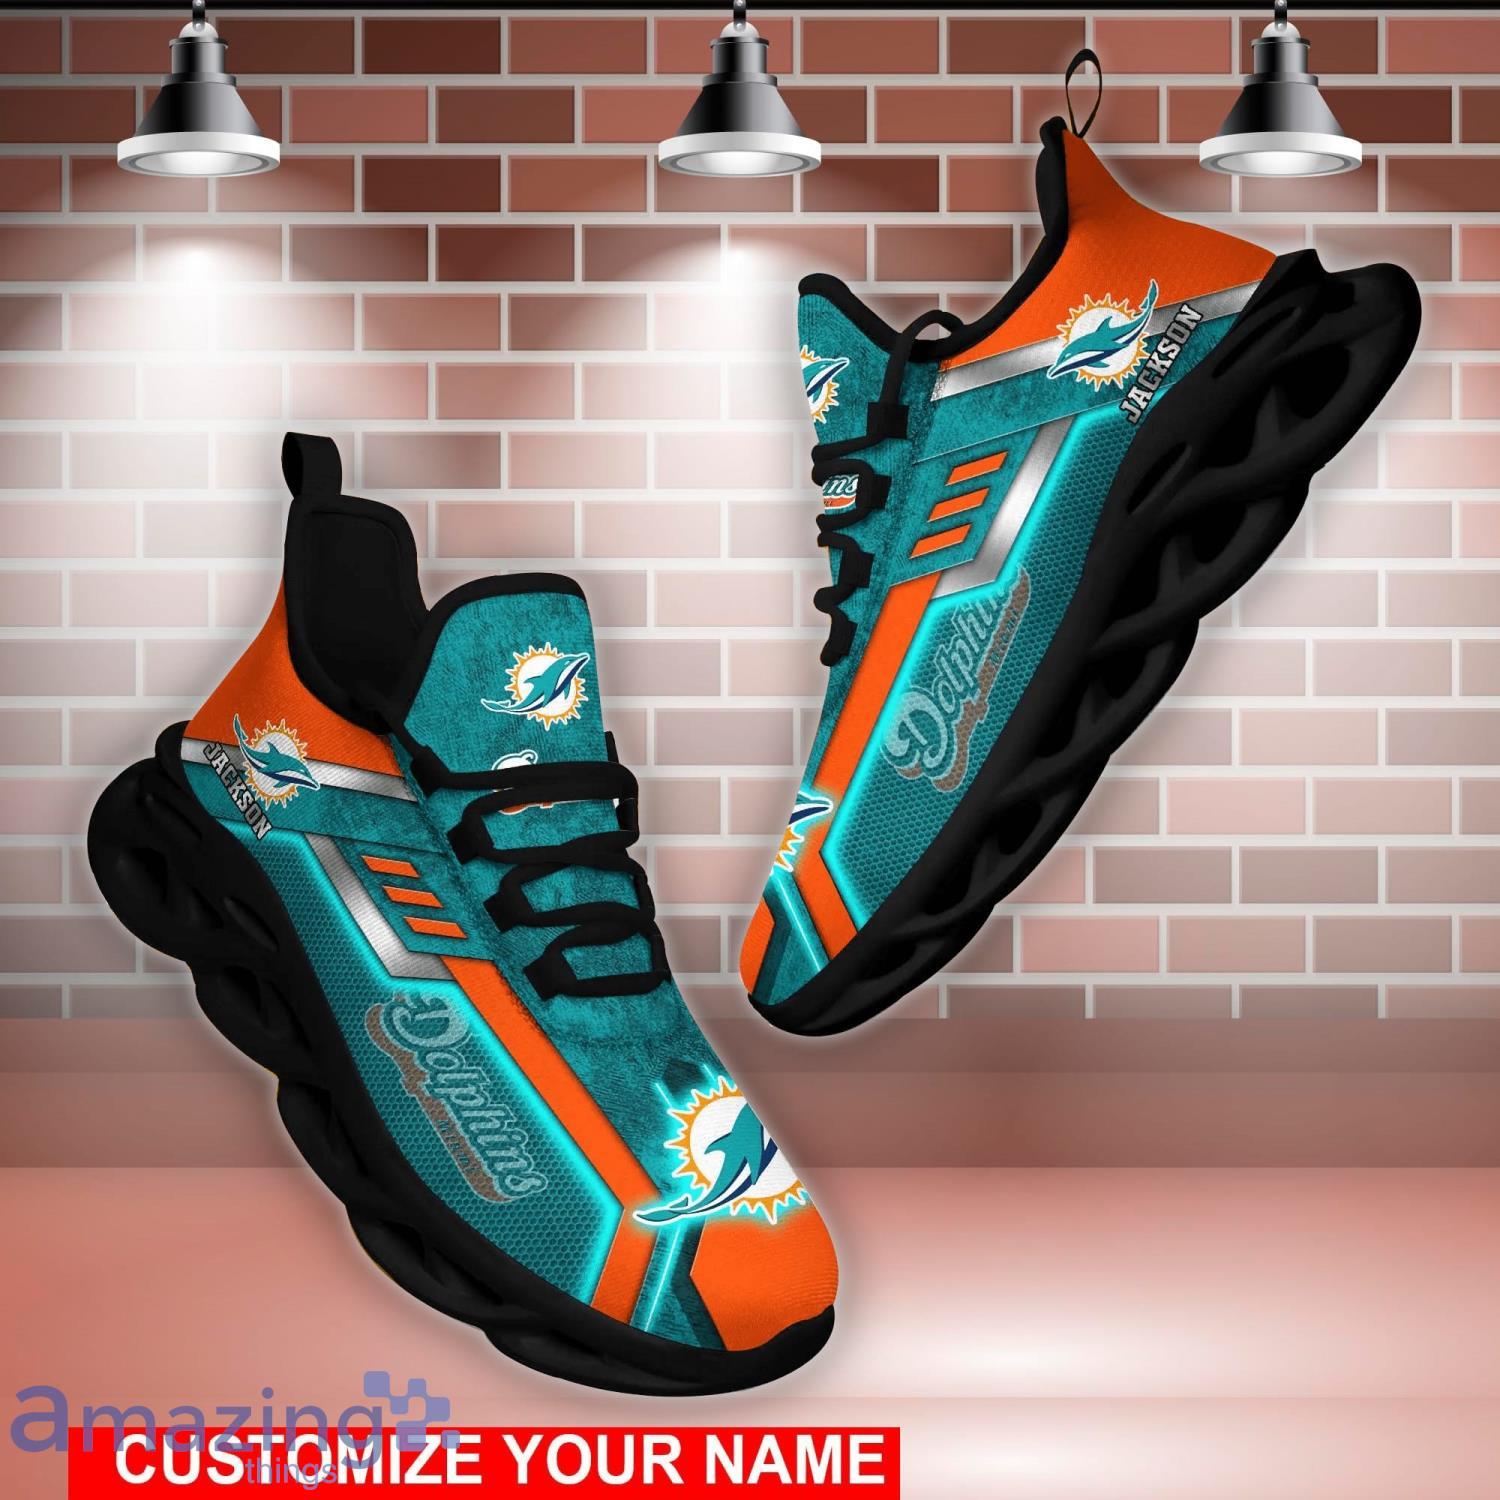 Miami Dolphins Custom Name Air Jordan 11 Sneaker Shoes For Sport